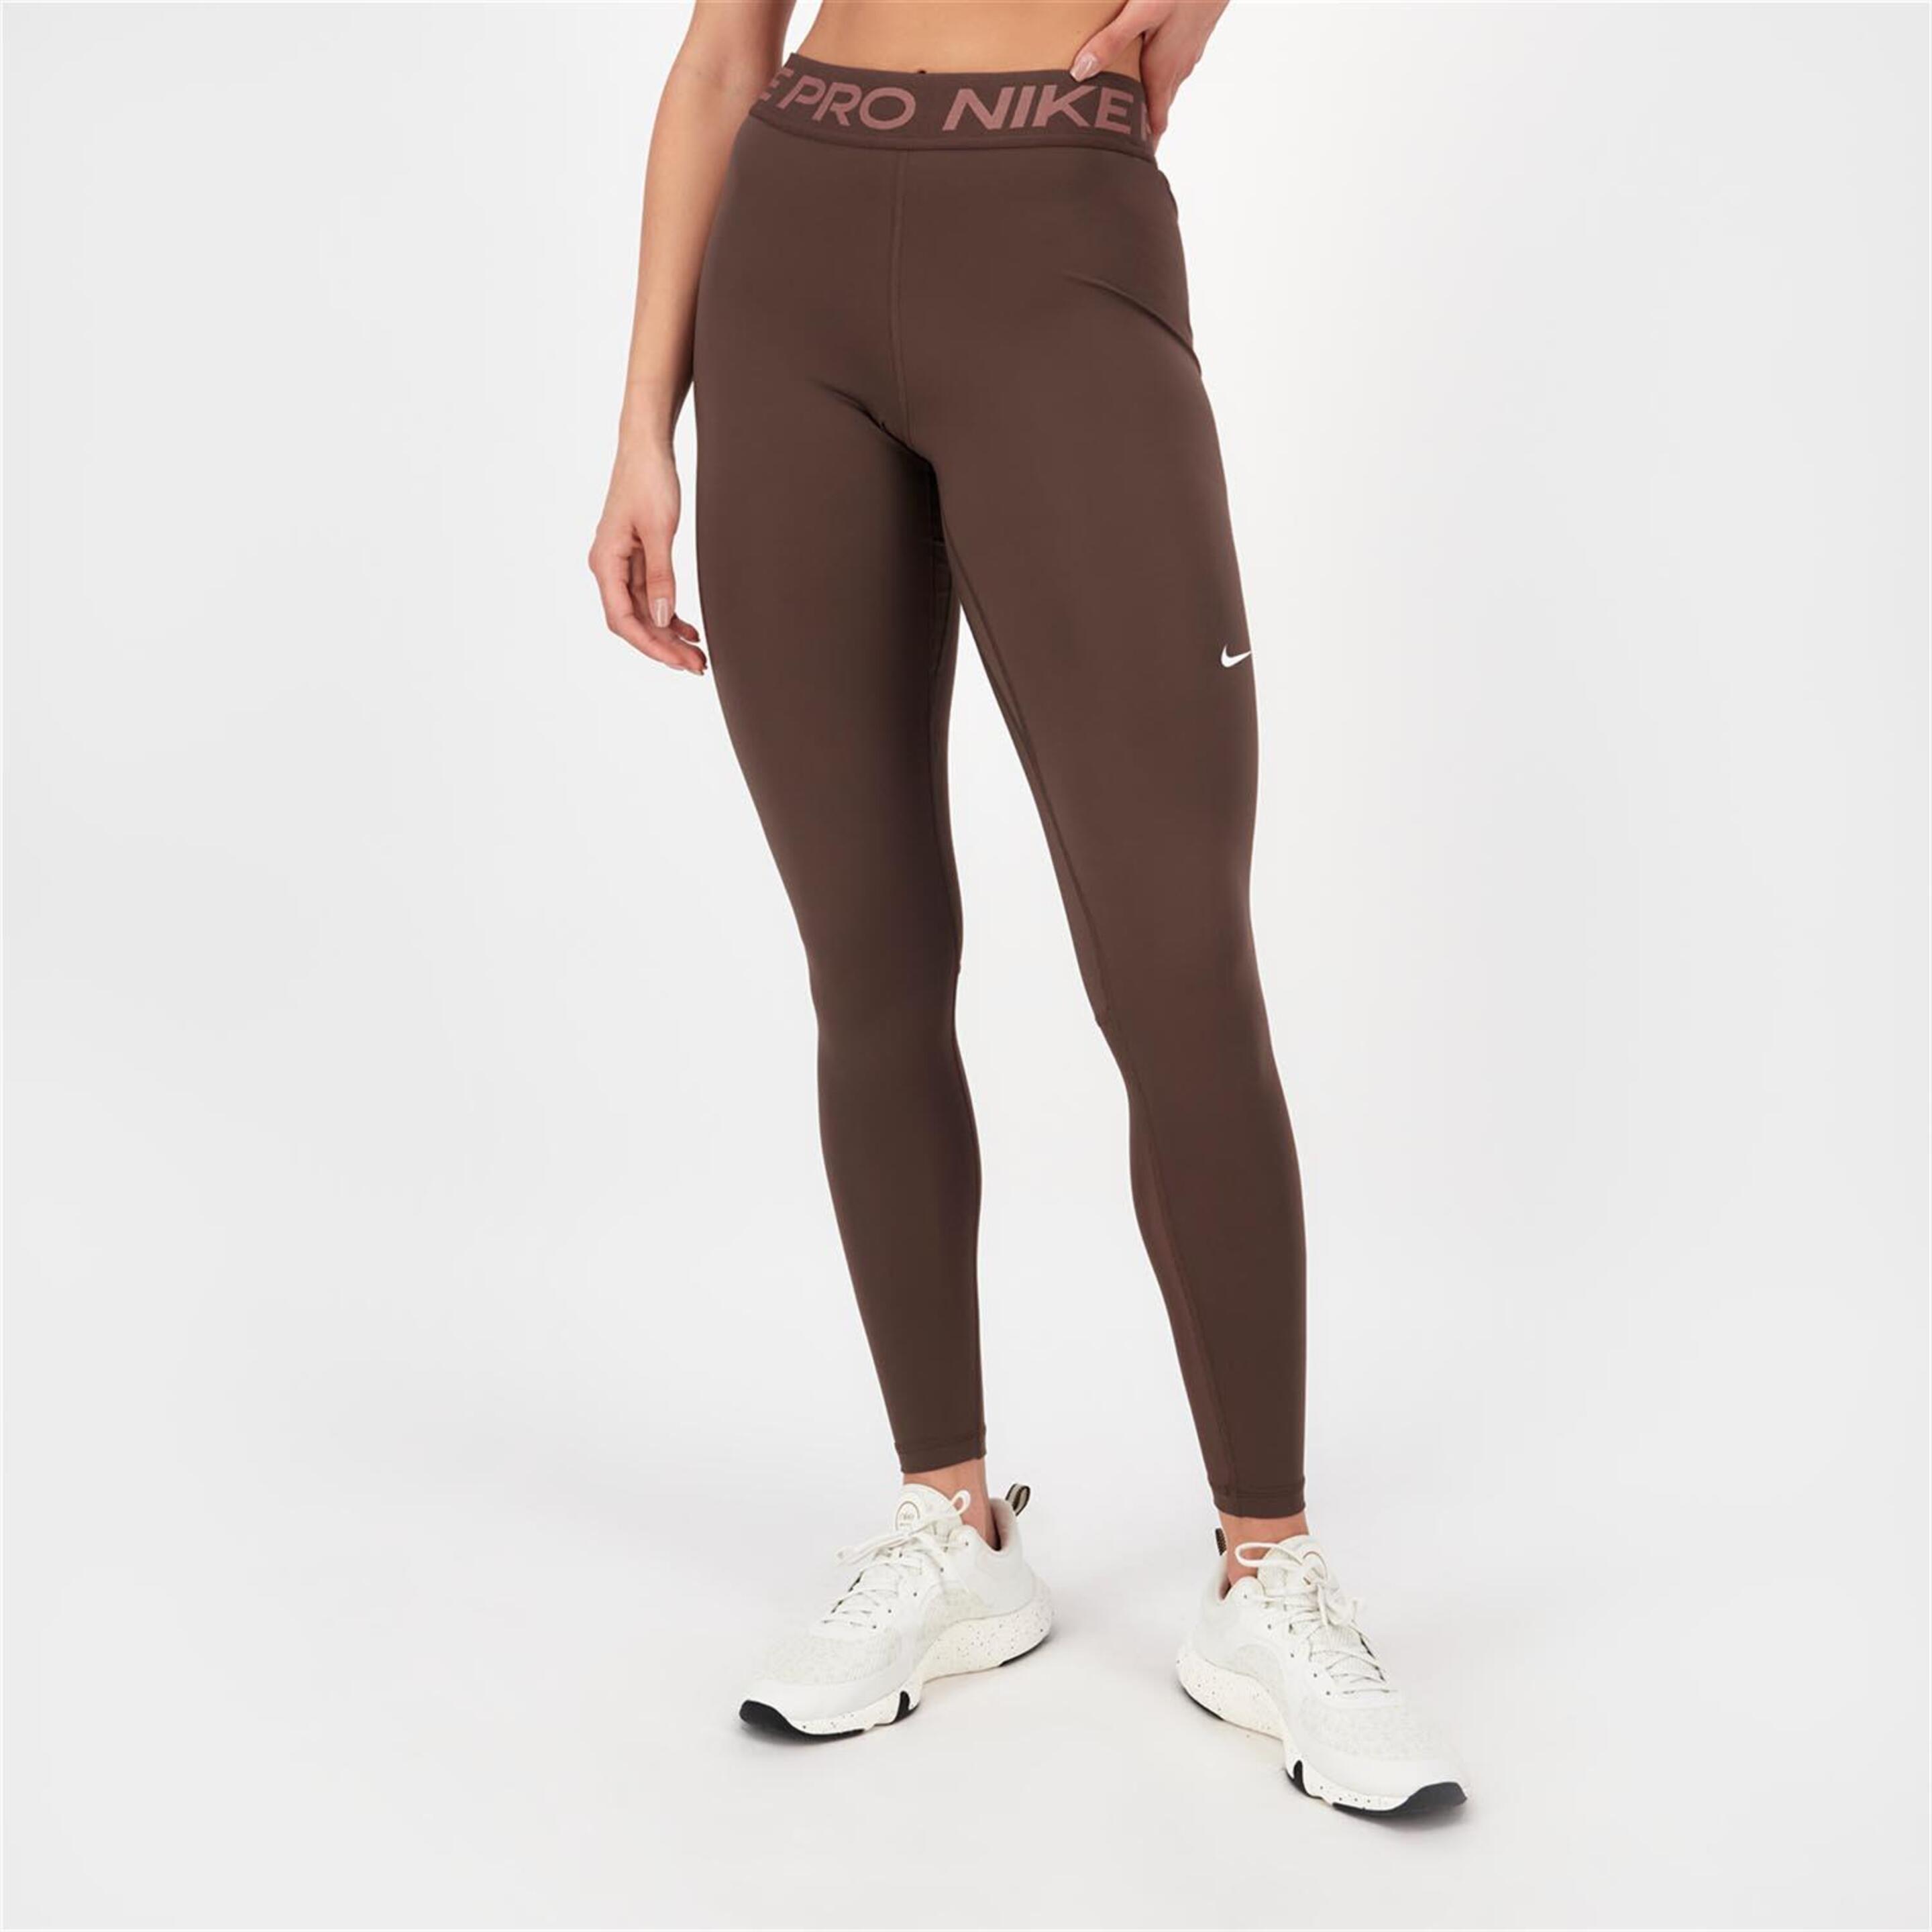 Nike Np Tight - marron - Leggings Fitness Mulher